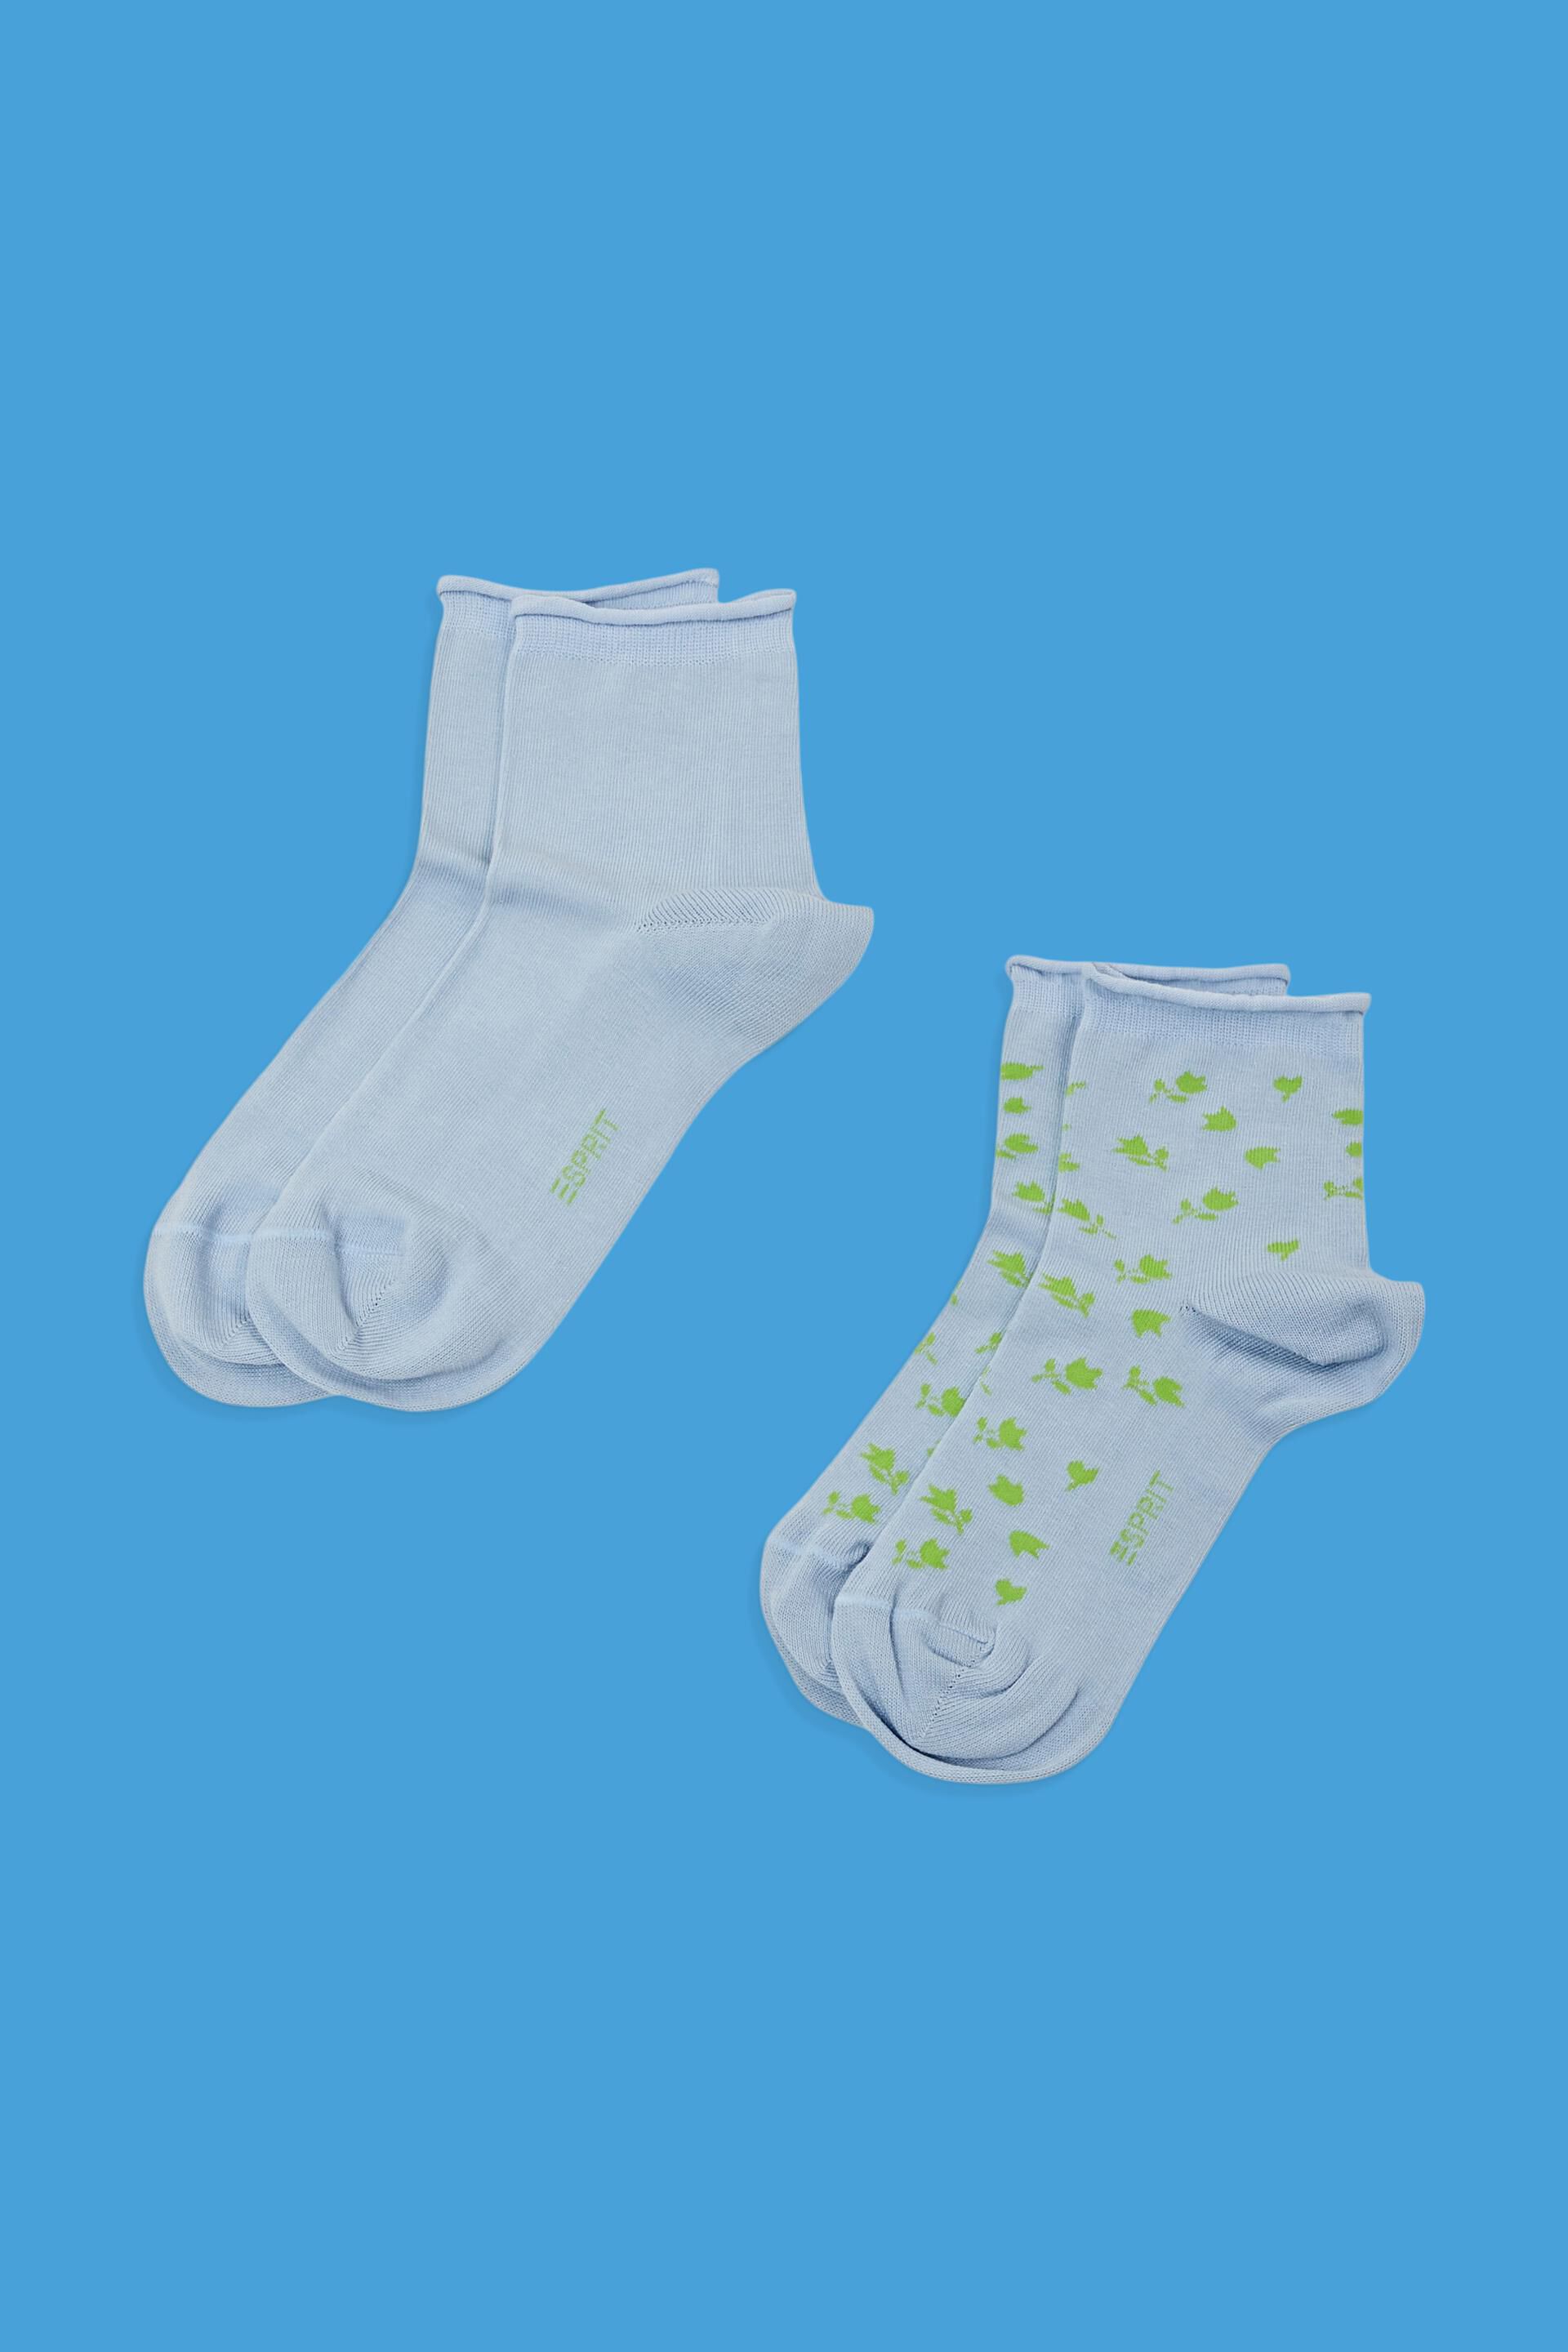 Esprit floral short 2-pack pattern of socks with